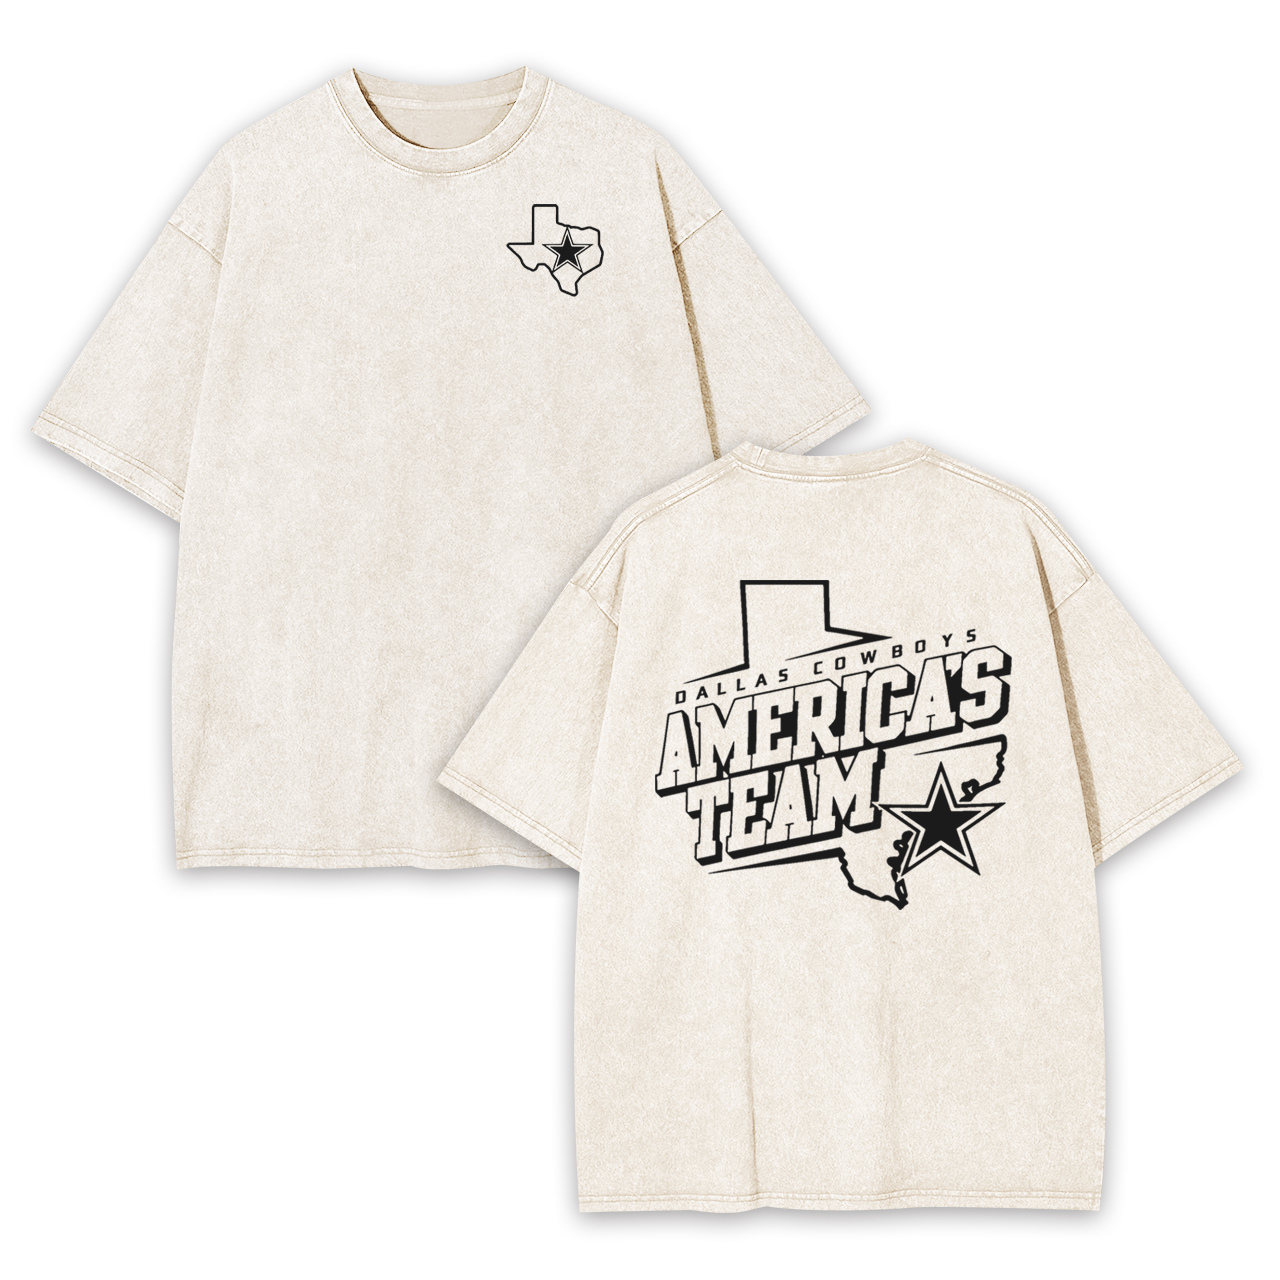 Texas Dallas Cowboys America’s Team Garment-dye Tees